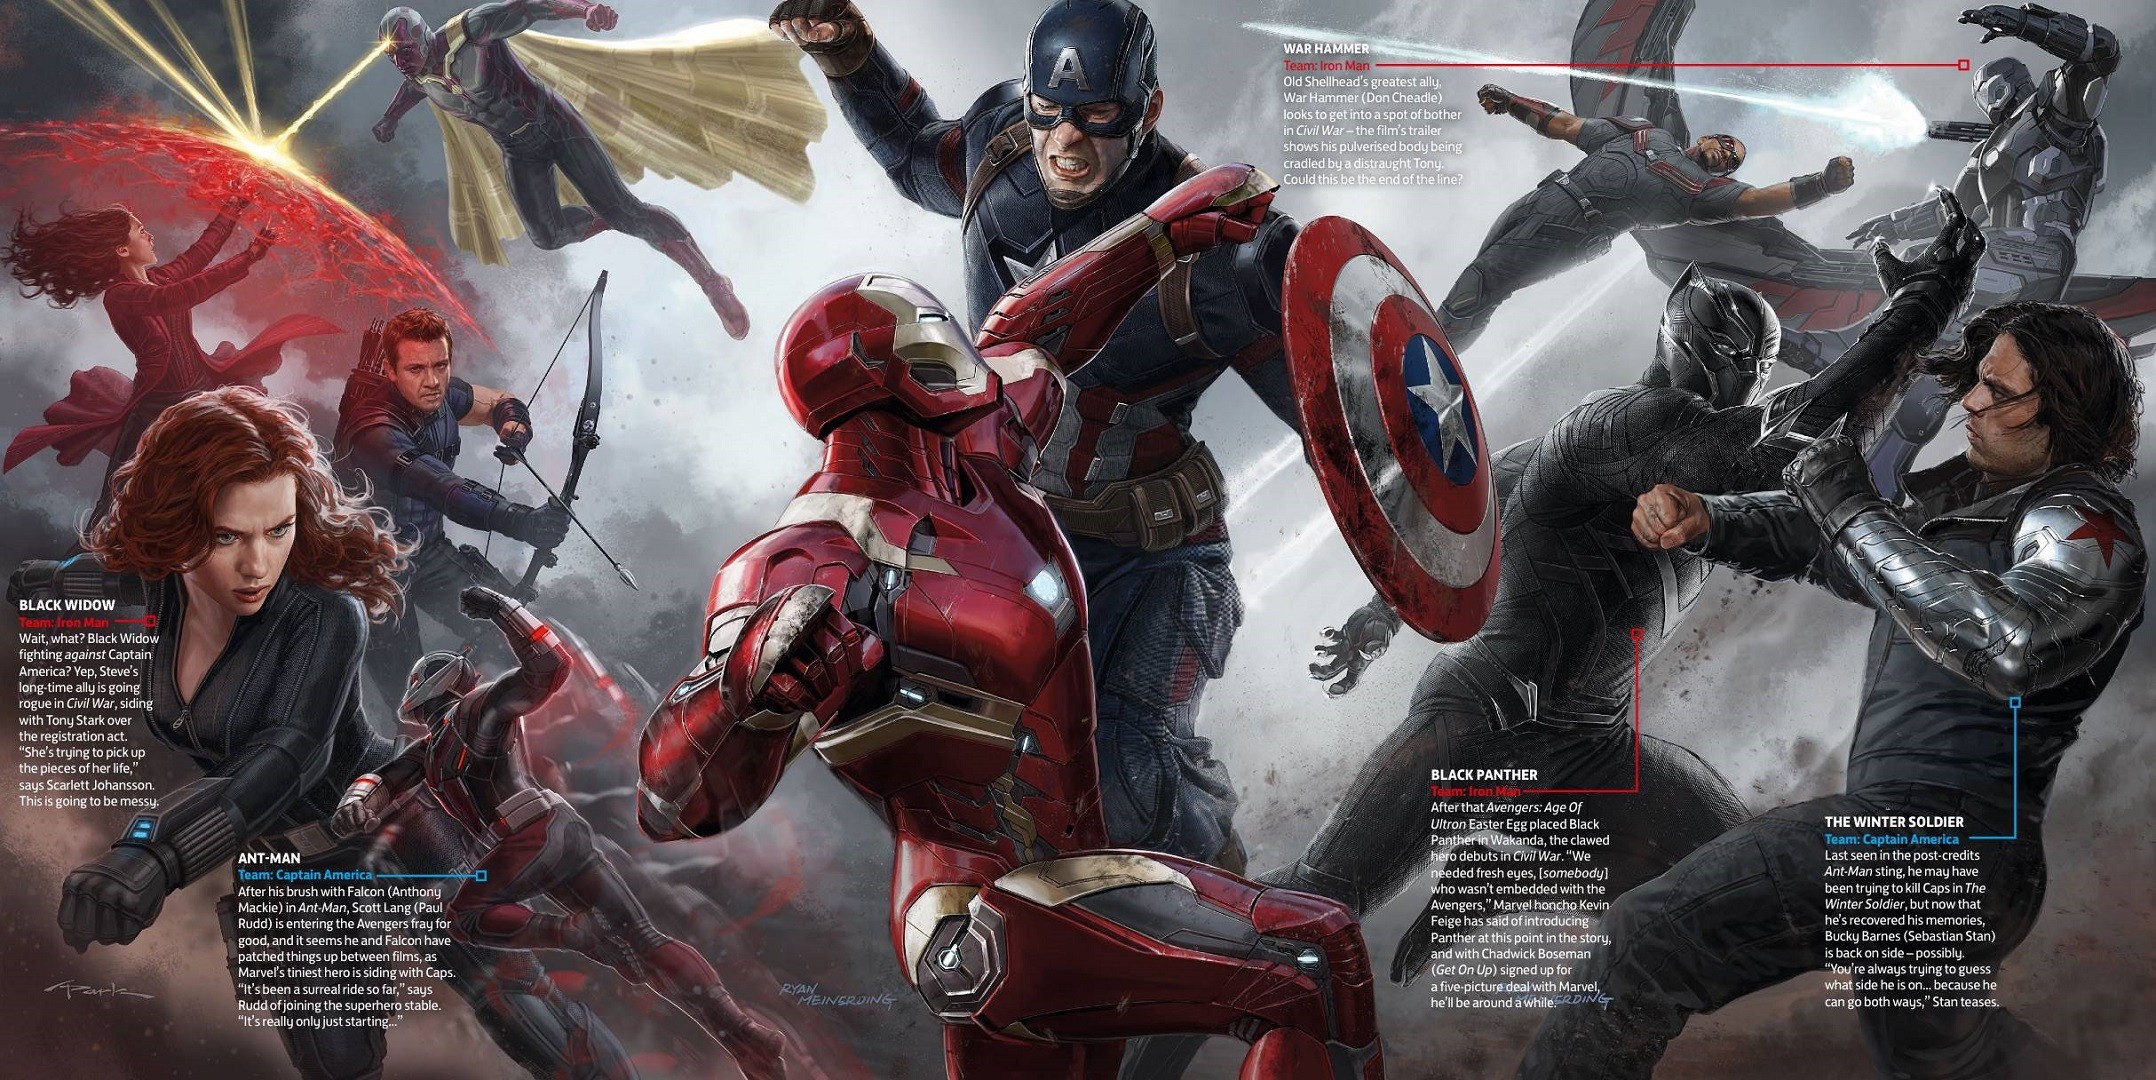 Captain America Captain America Civil War Iron Man Ant Man Black Panther Movies Marvel Comics Hawkey 2156x1080